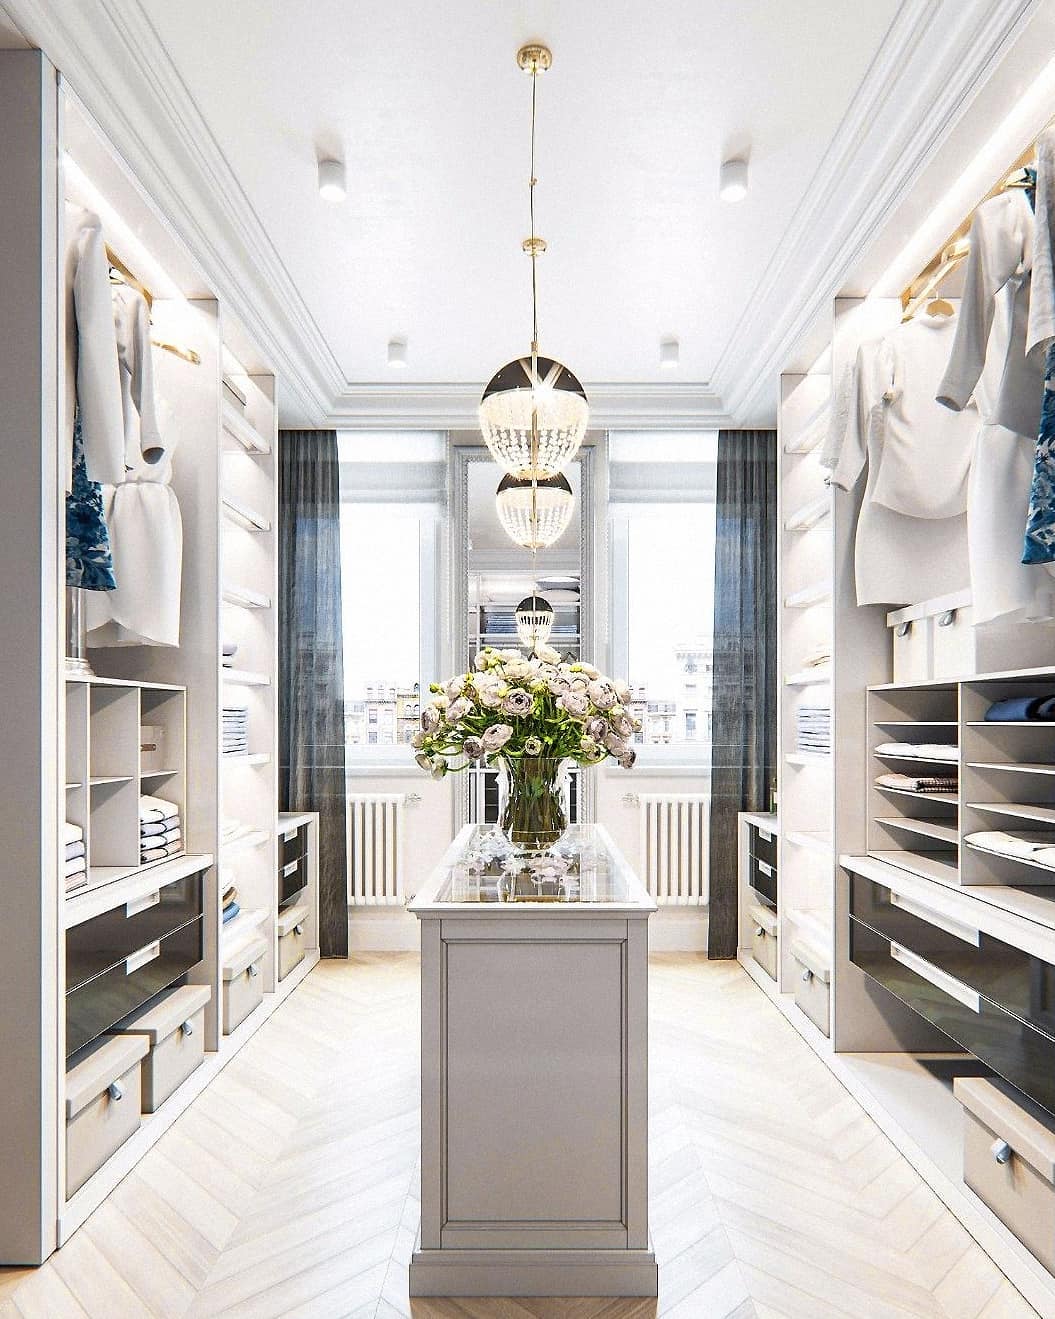 Luxury closet with organized shelves. Photo by Instagram user @salvatoreizzointeriors